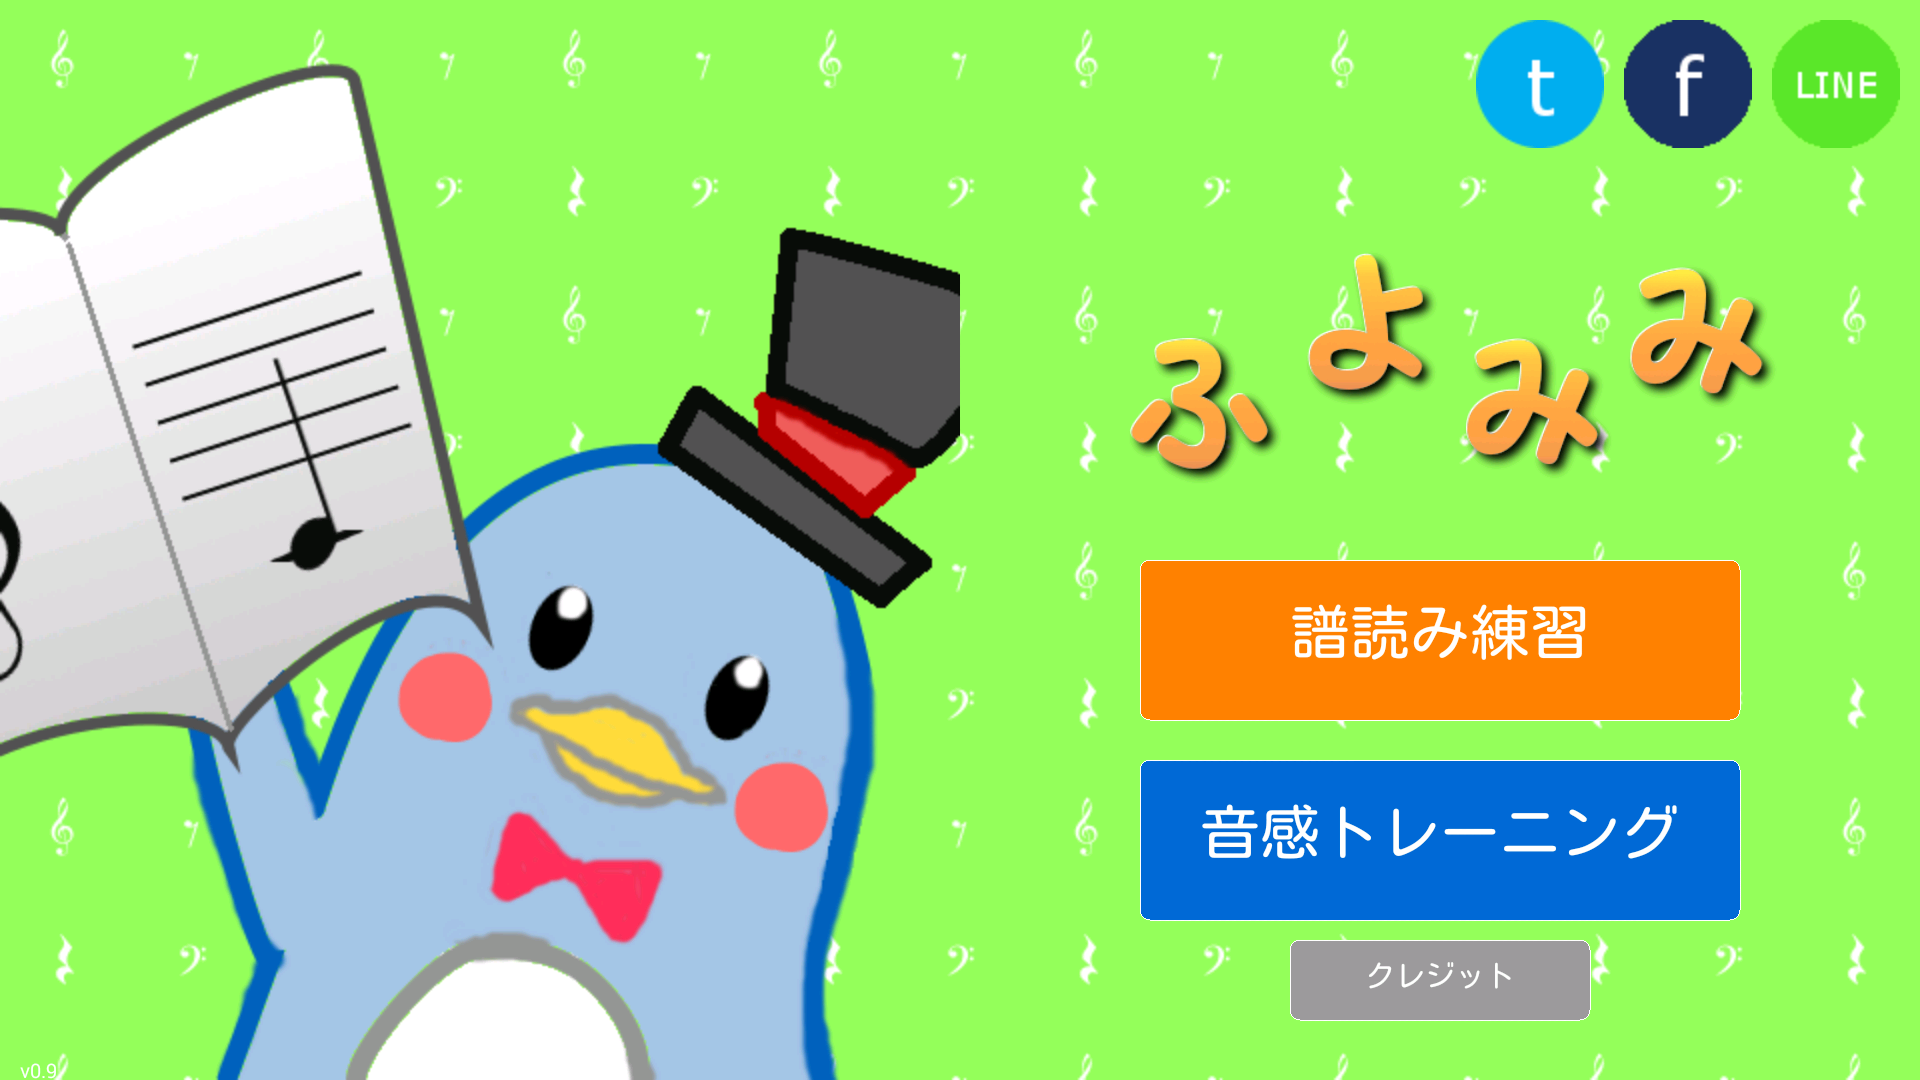 Android application ふよみみ screenshort